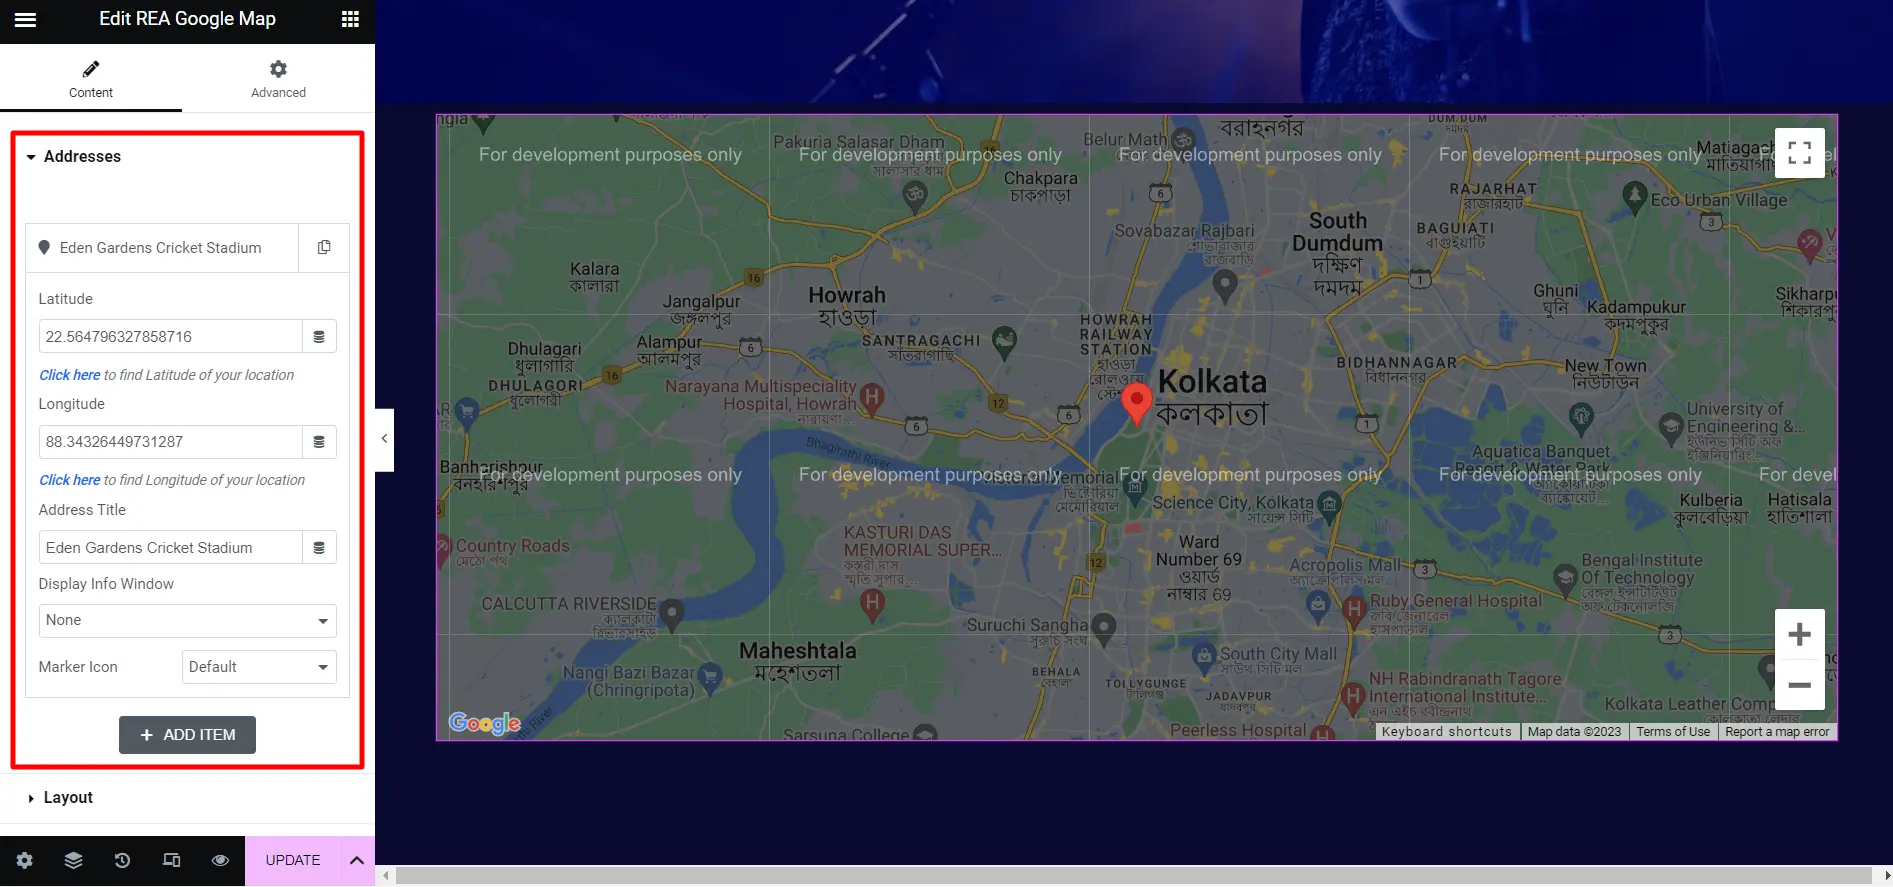 REA Google Maps- Address